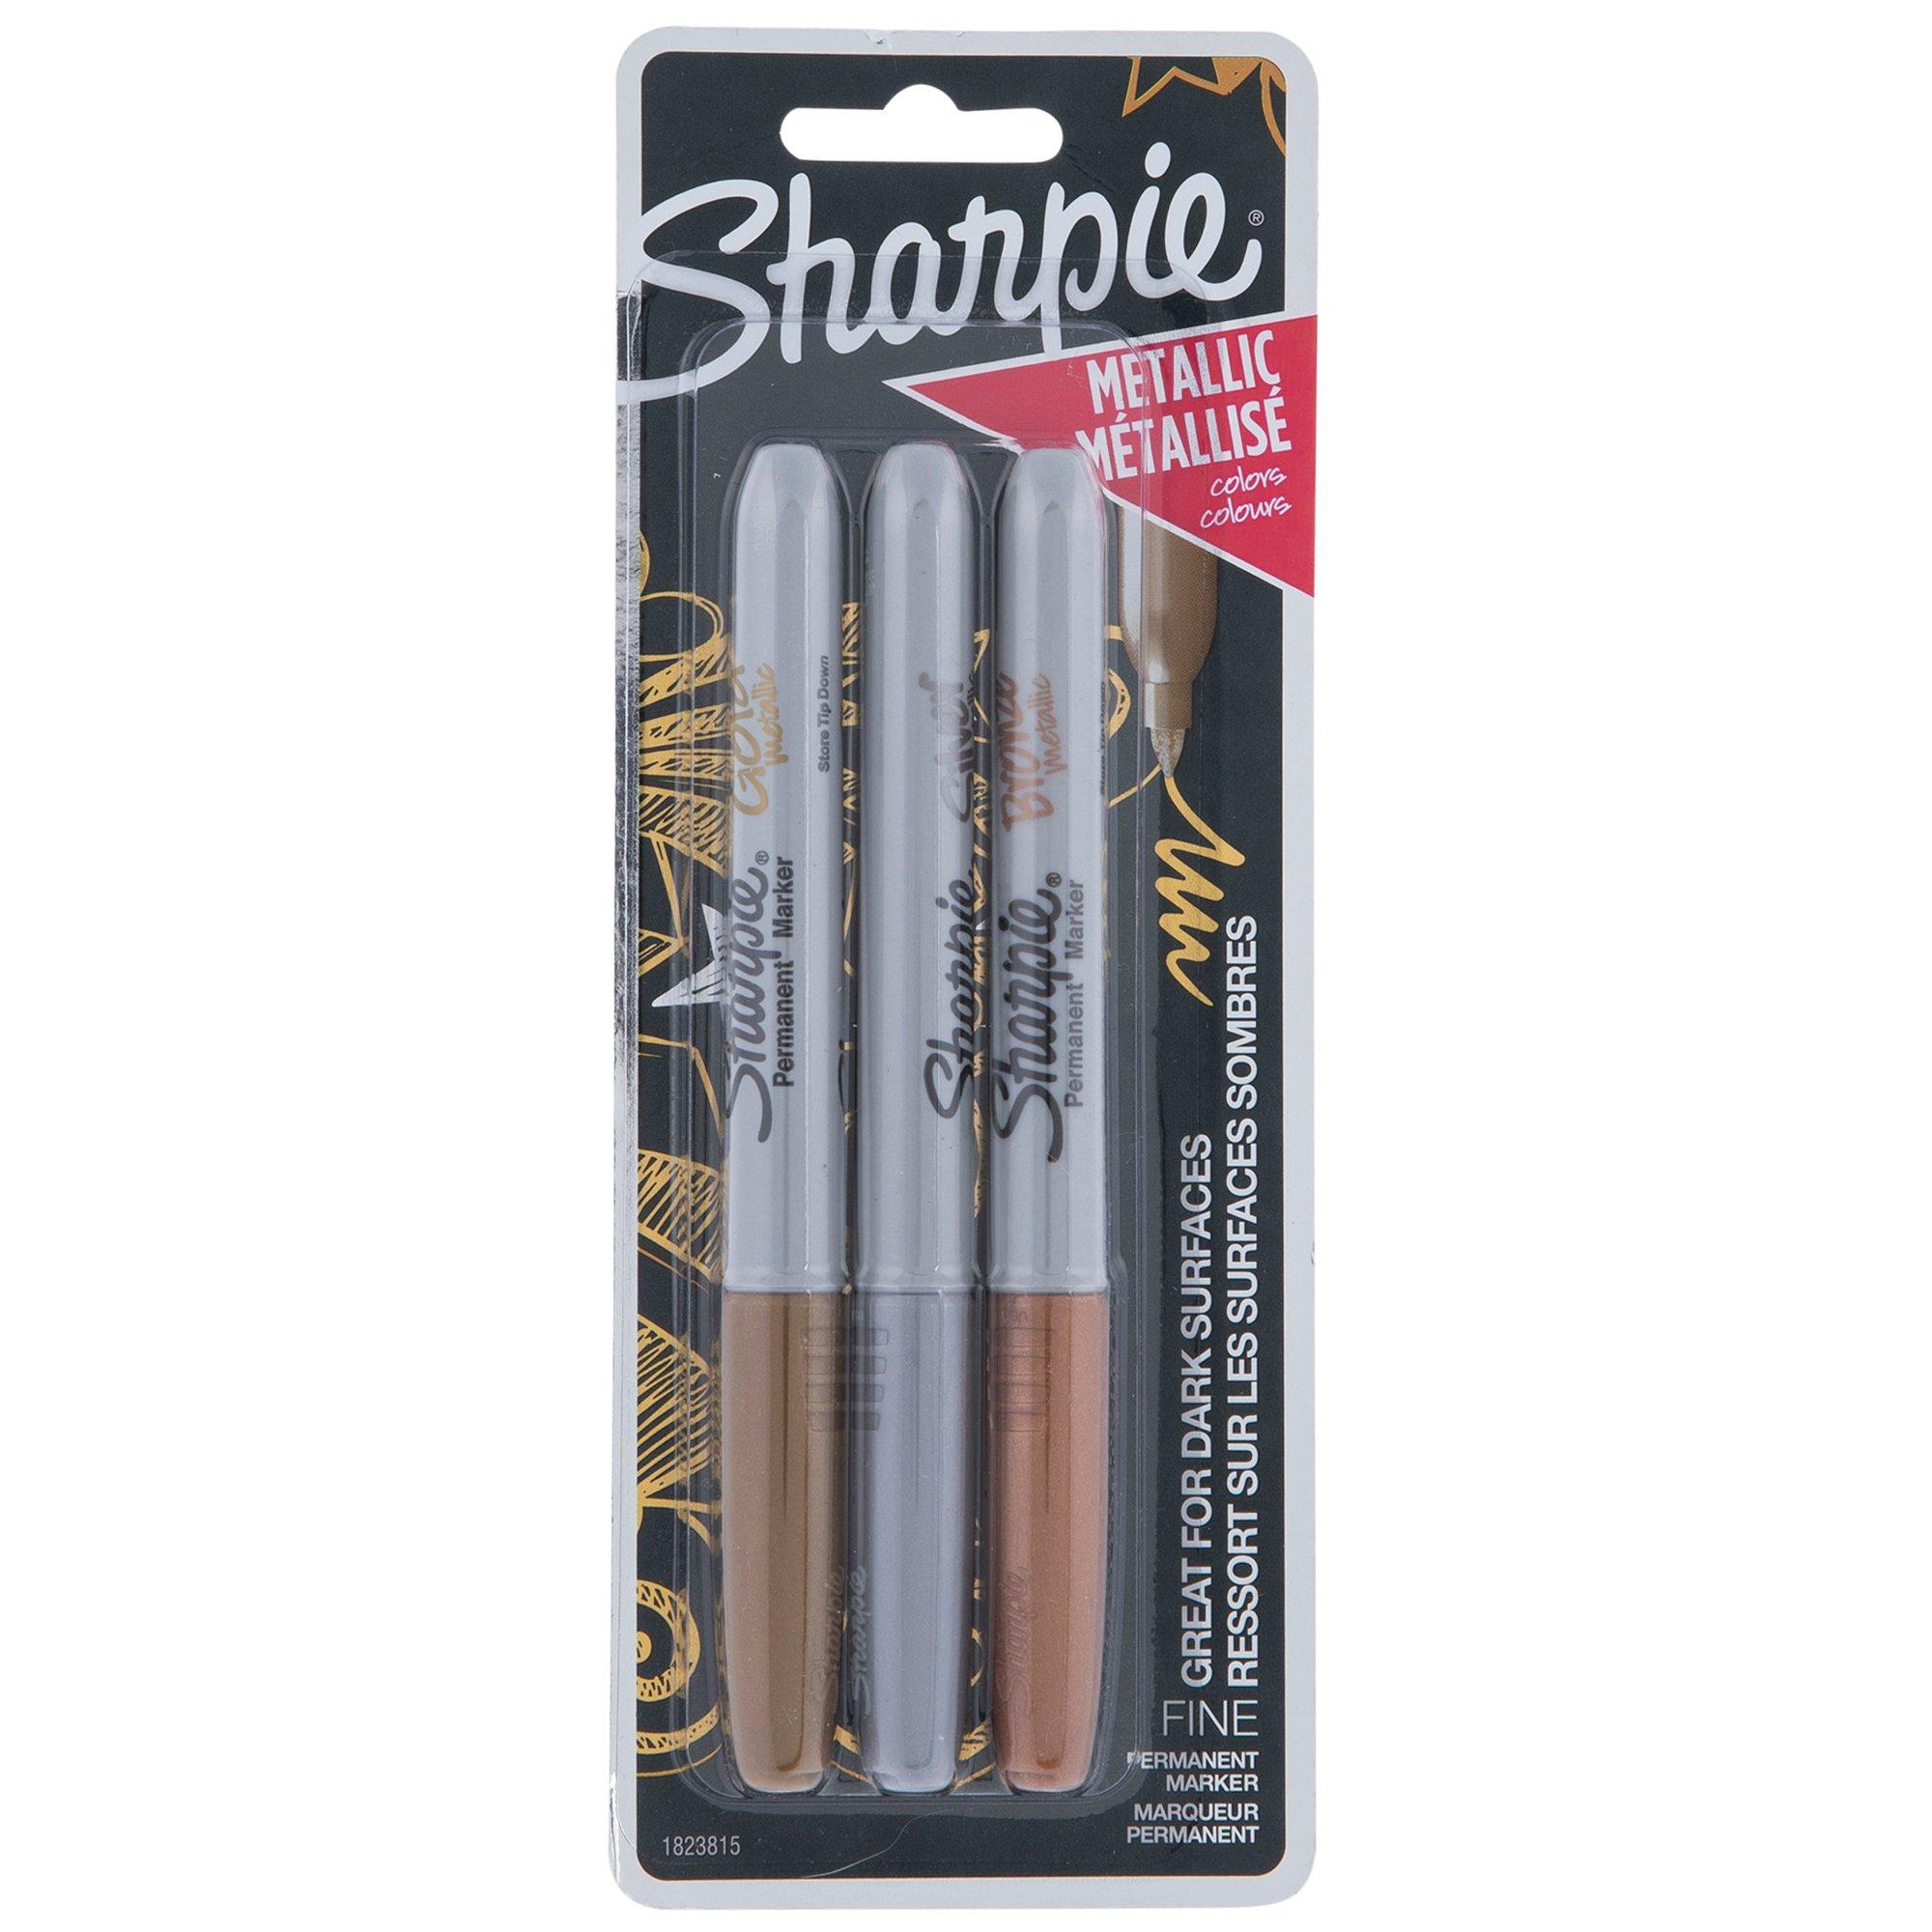 Sharpie 05364 Permanent Marker Metallic Set Of 3 (Gold, Silver